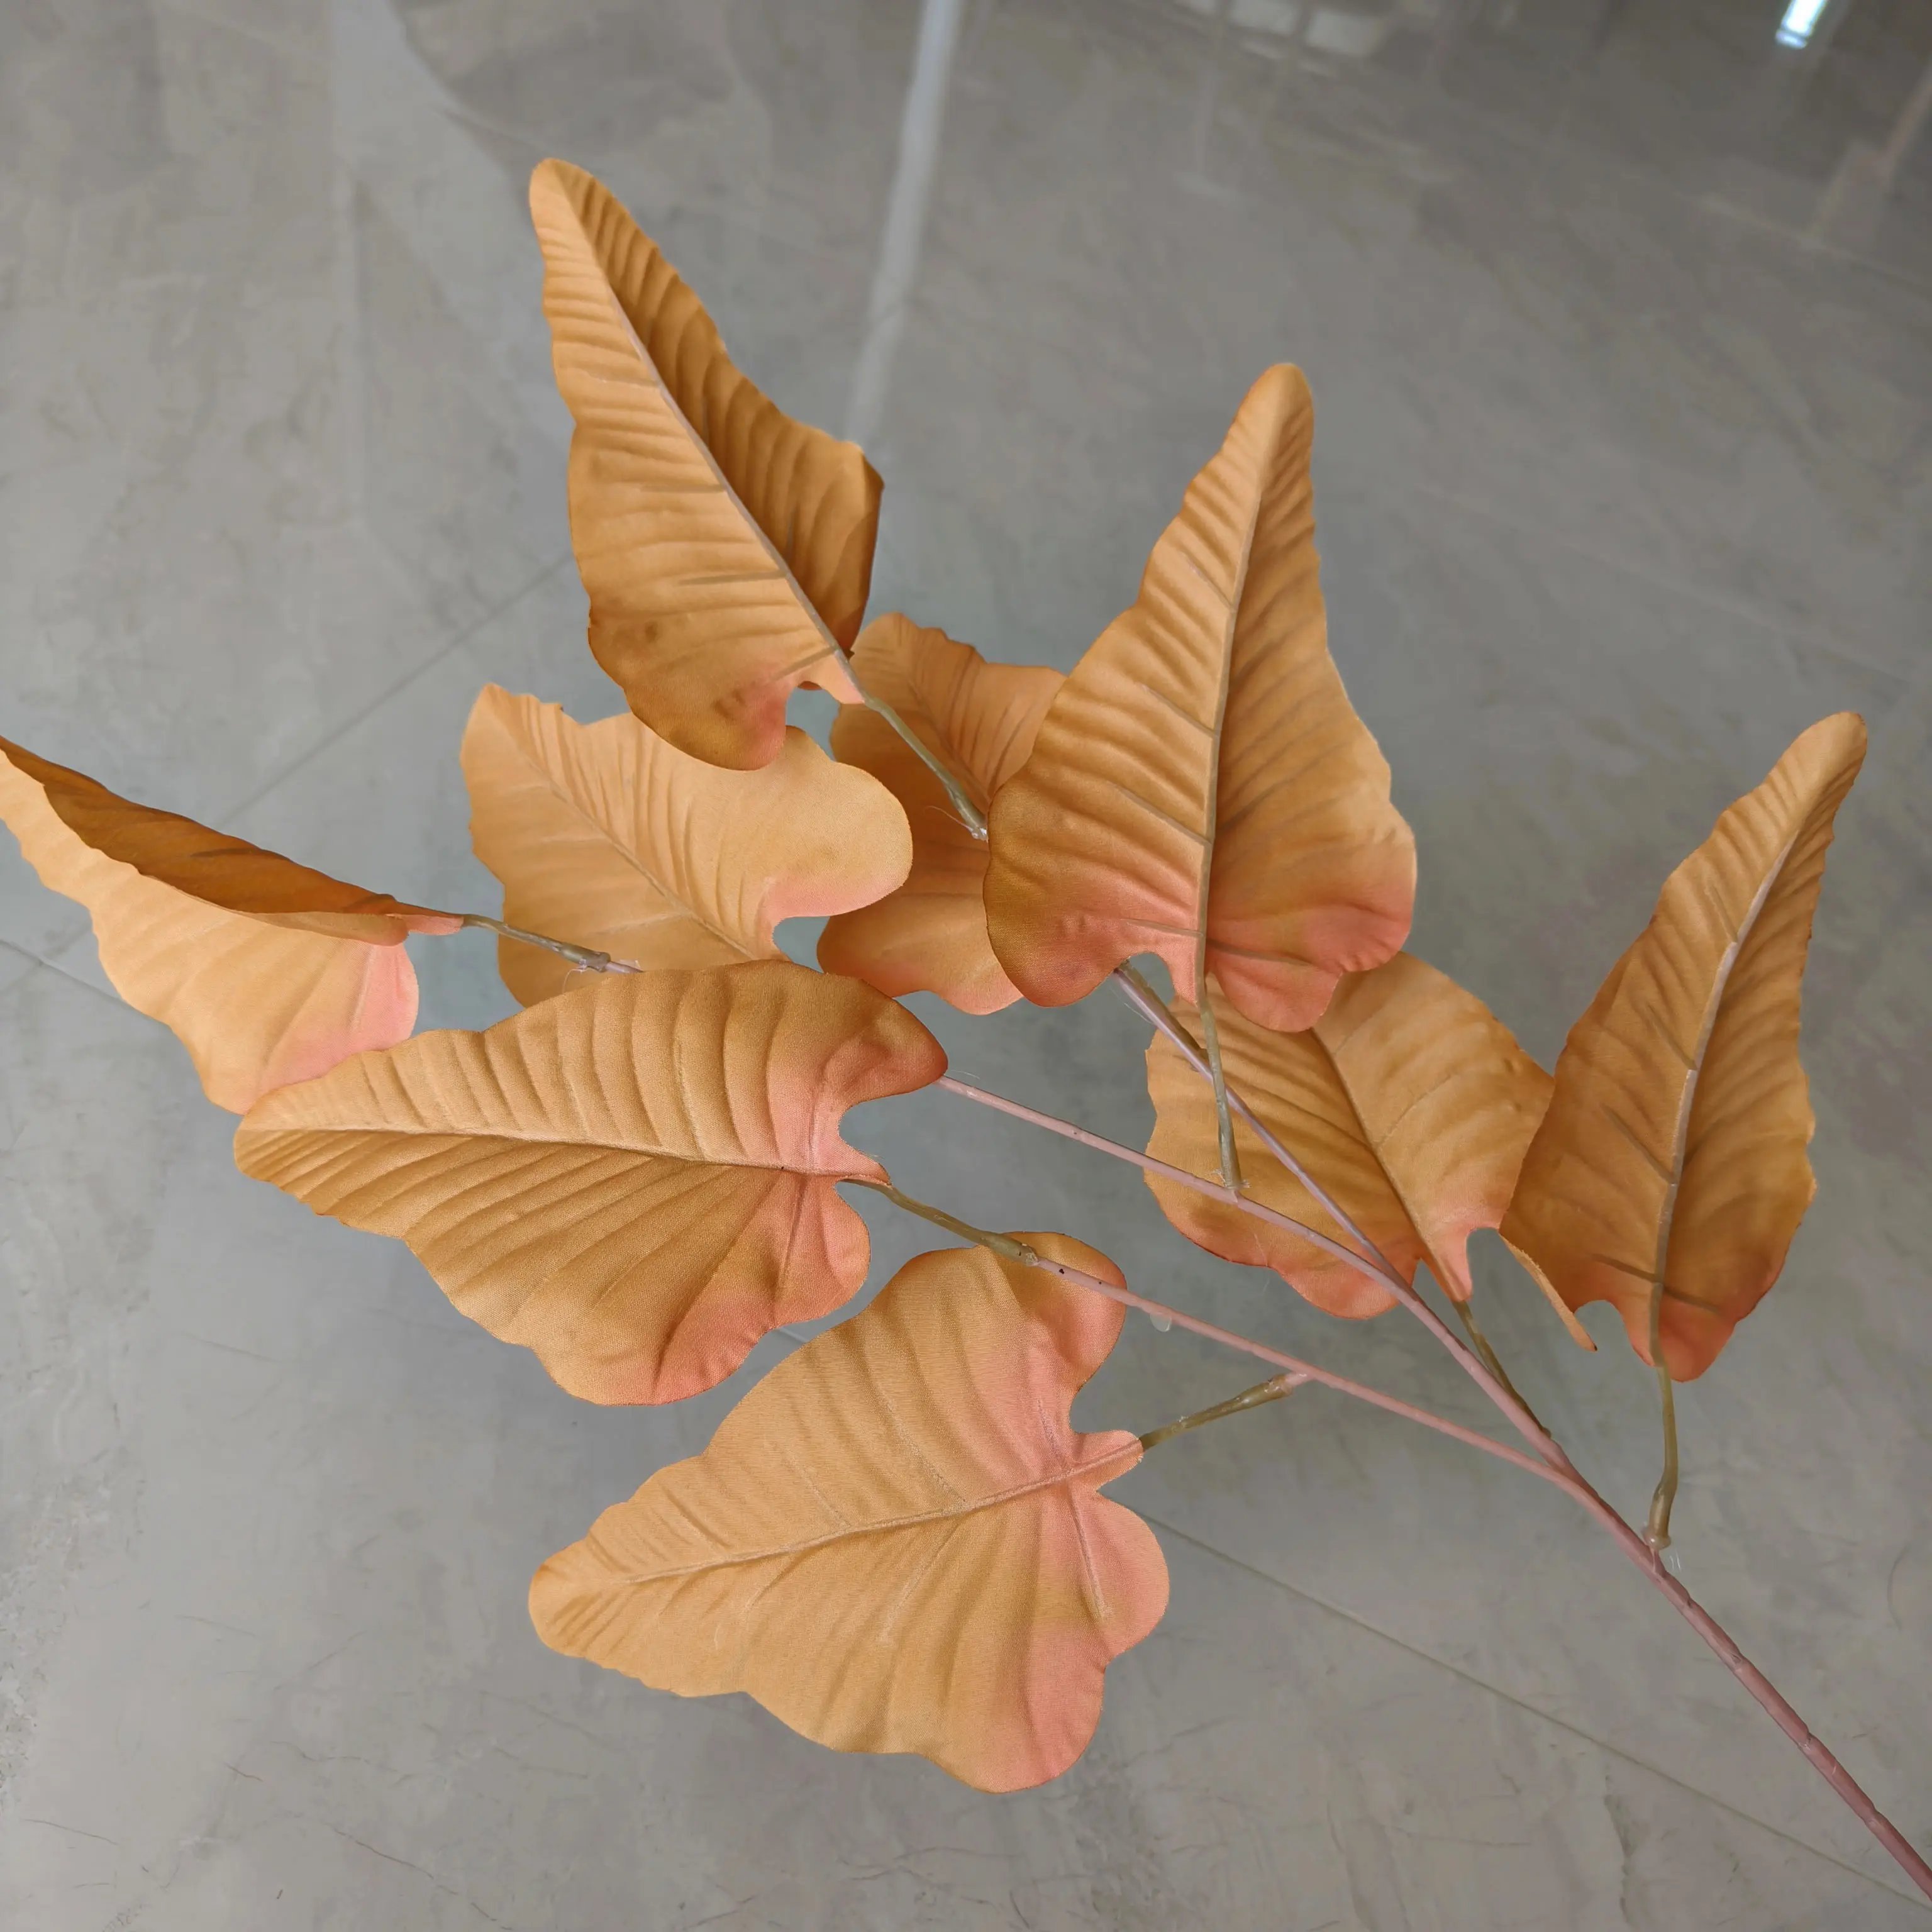 YIWAN YZY Hot sale horseshoe leaf silk leaves Artificial Plastic stems Artificial eucalyptus leaf for wedding home decorative